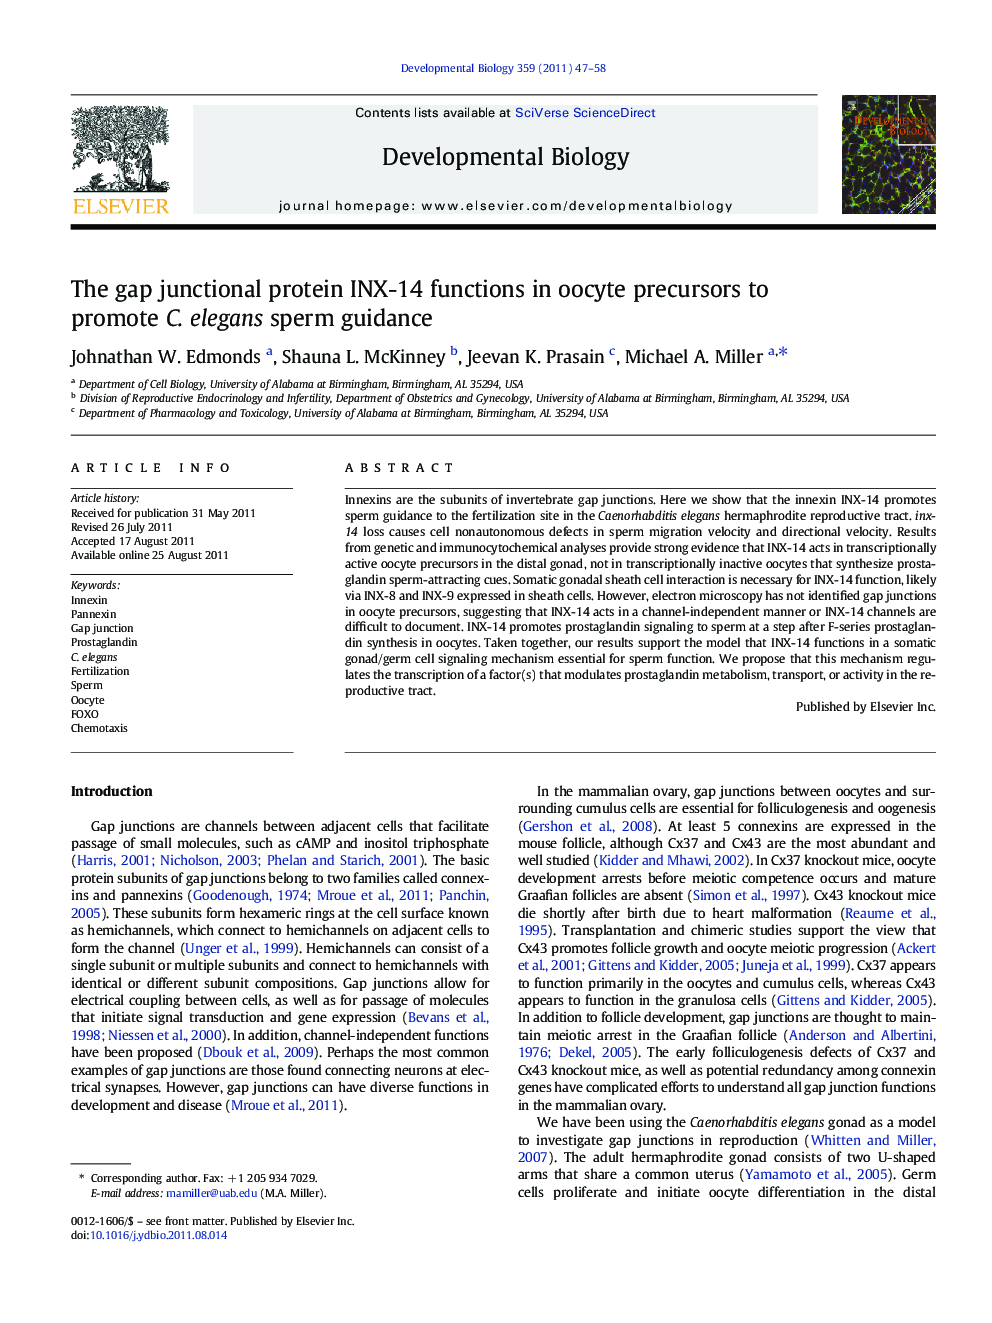 The gap junctional protein INX-14 functions in oocyte precursors to promote C. elegans sperm guidance